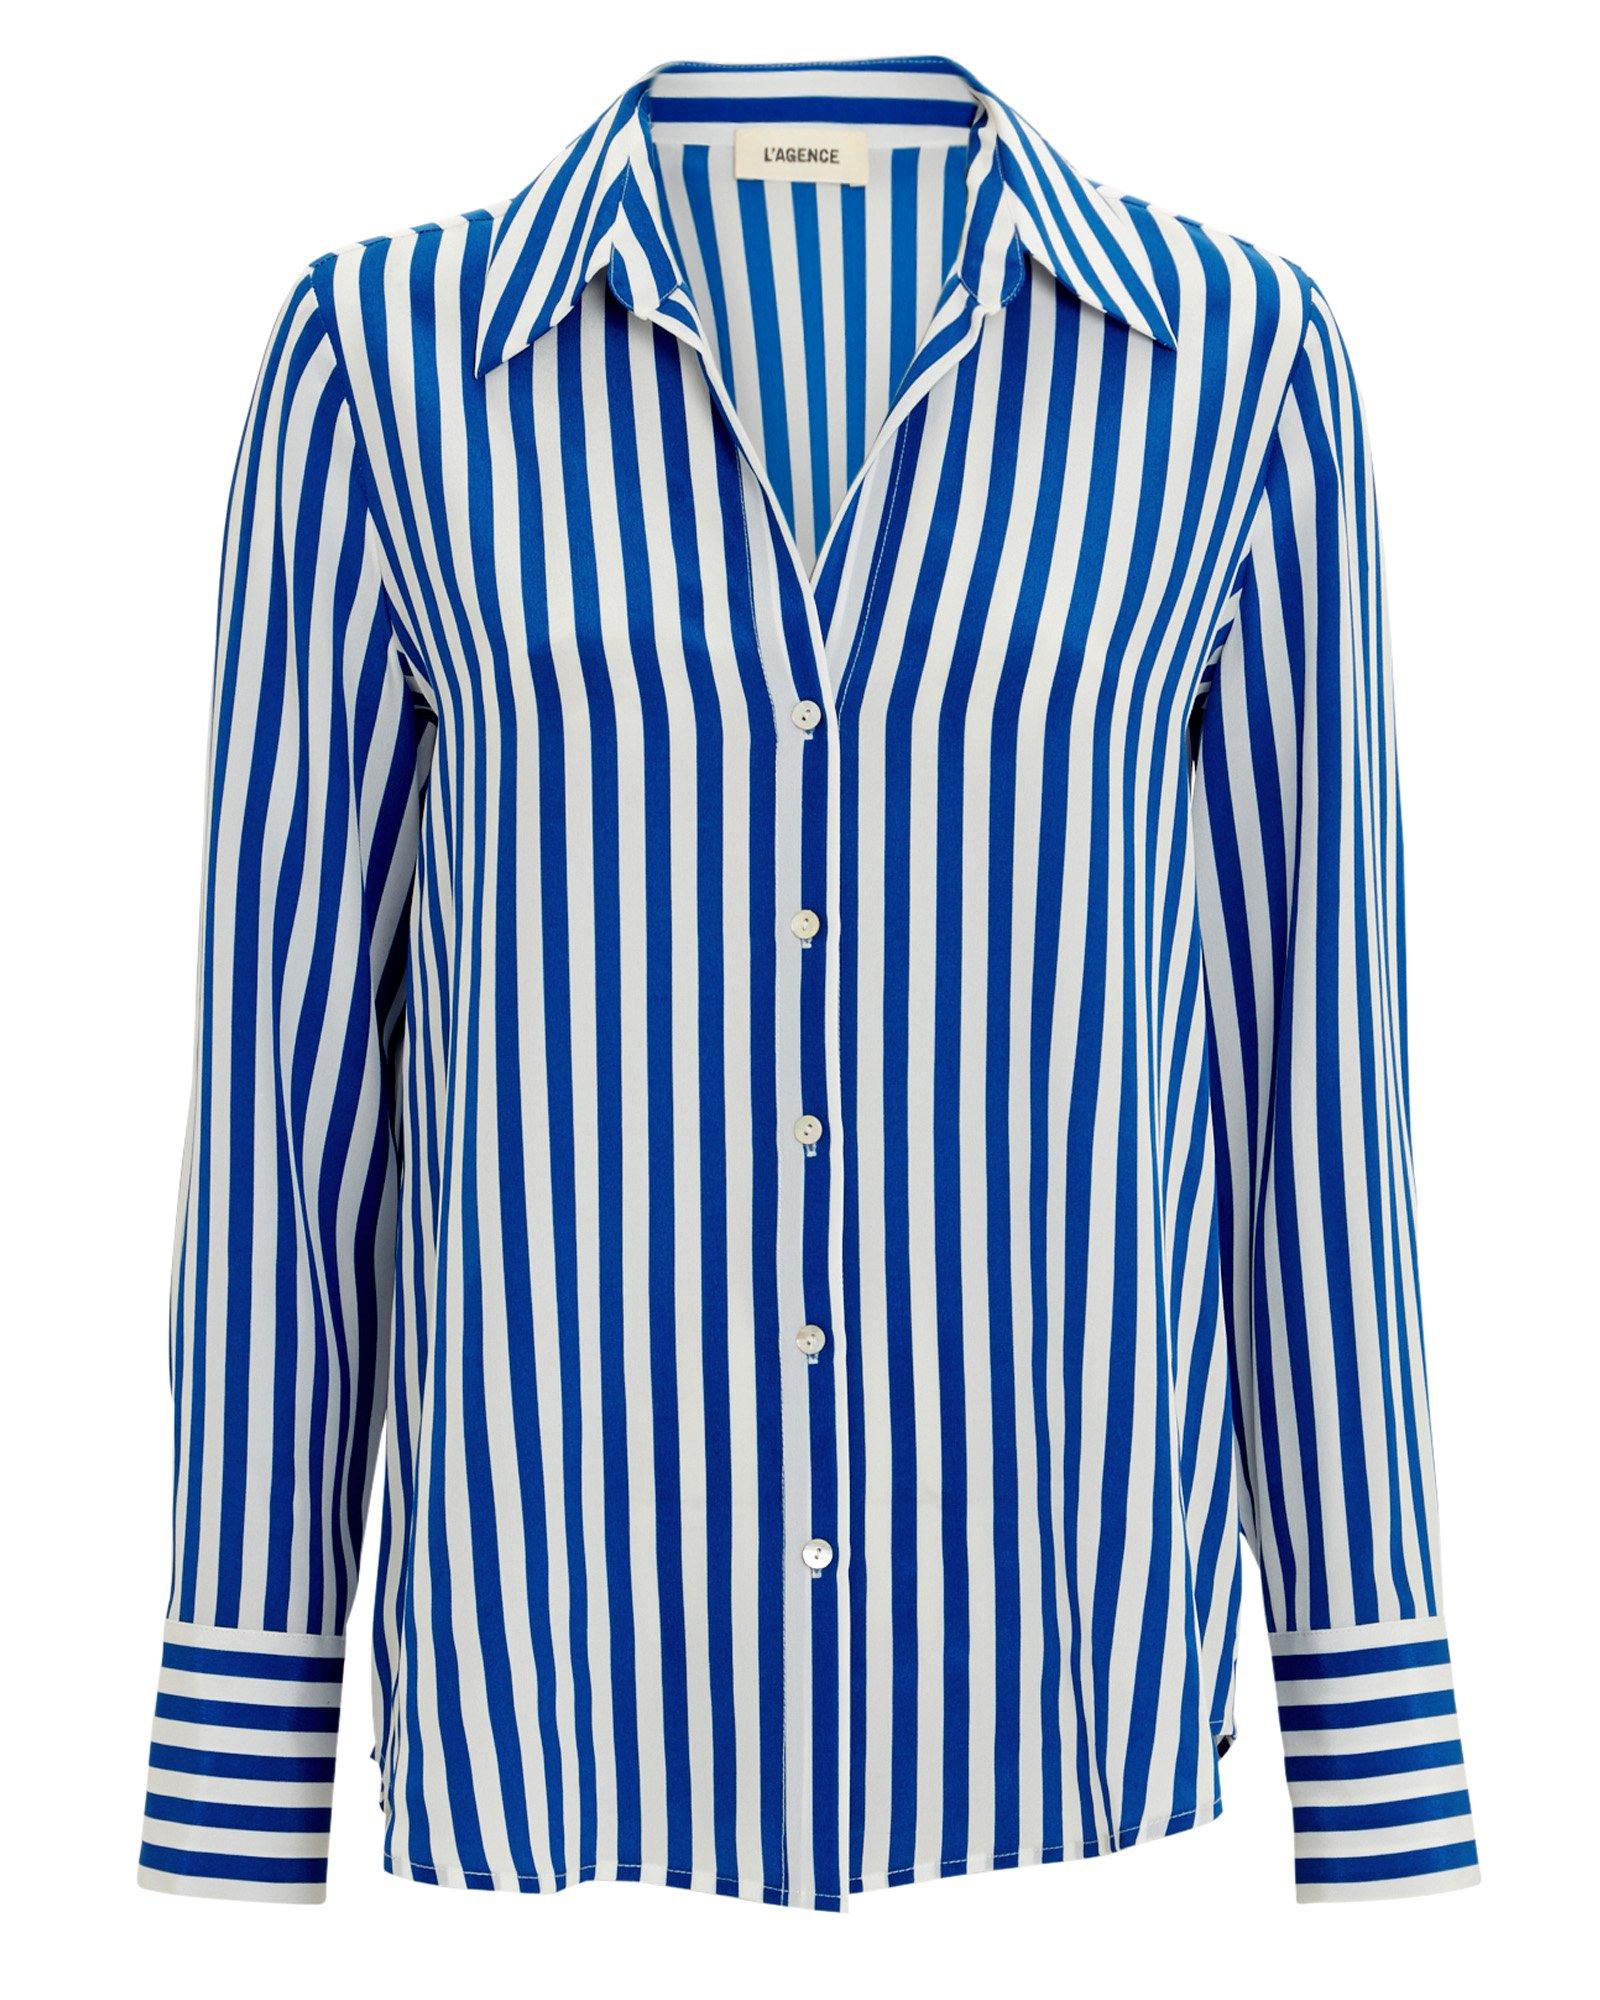 L'Agence Brielle Striped Silk Blouse in Blue/White/Stripes (Blue 